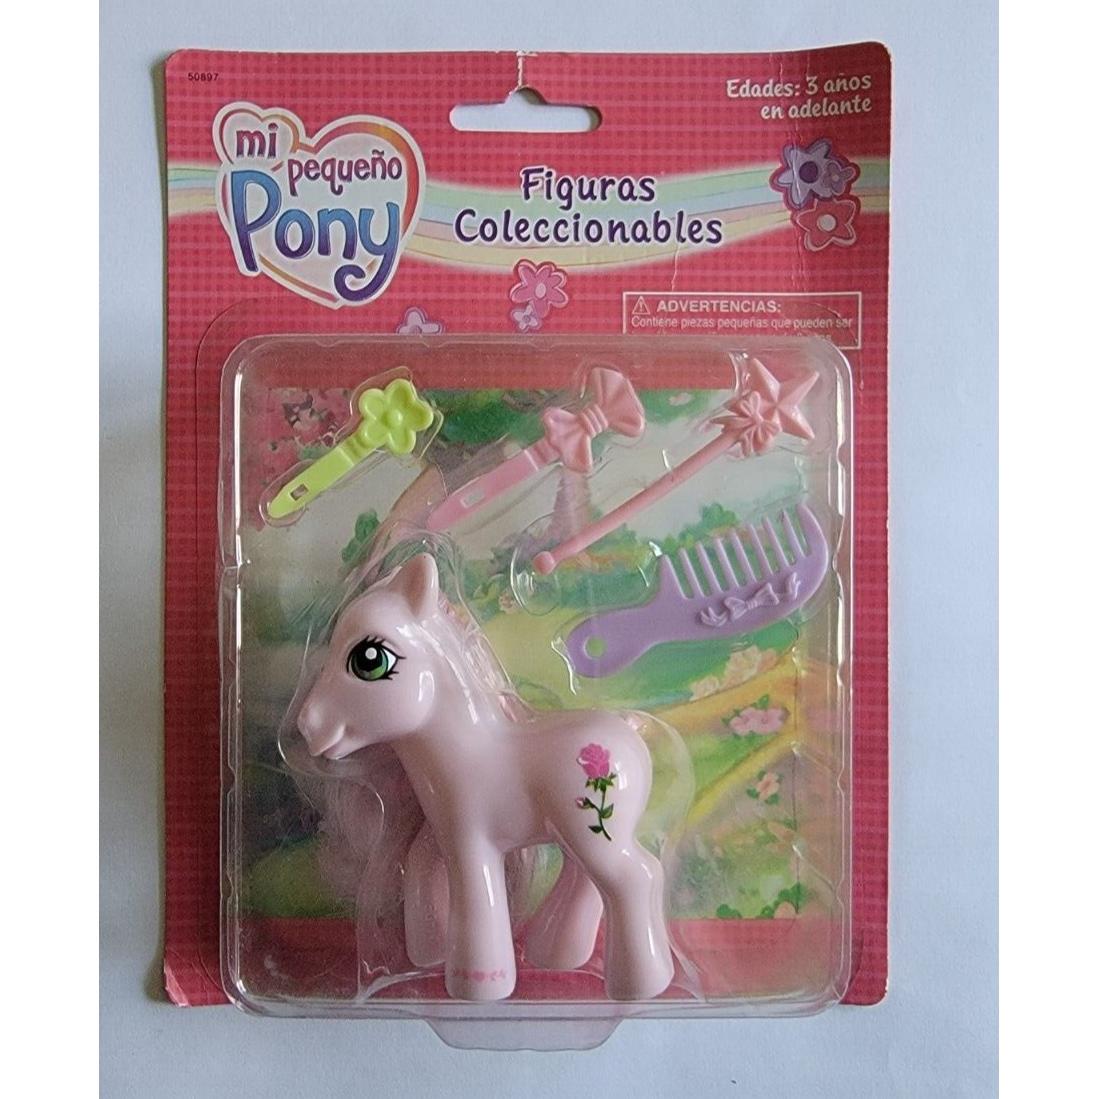 My Little Pony G3 Mexican Hard-plastic Minty Moc Mi Peque o Pony